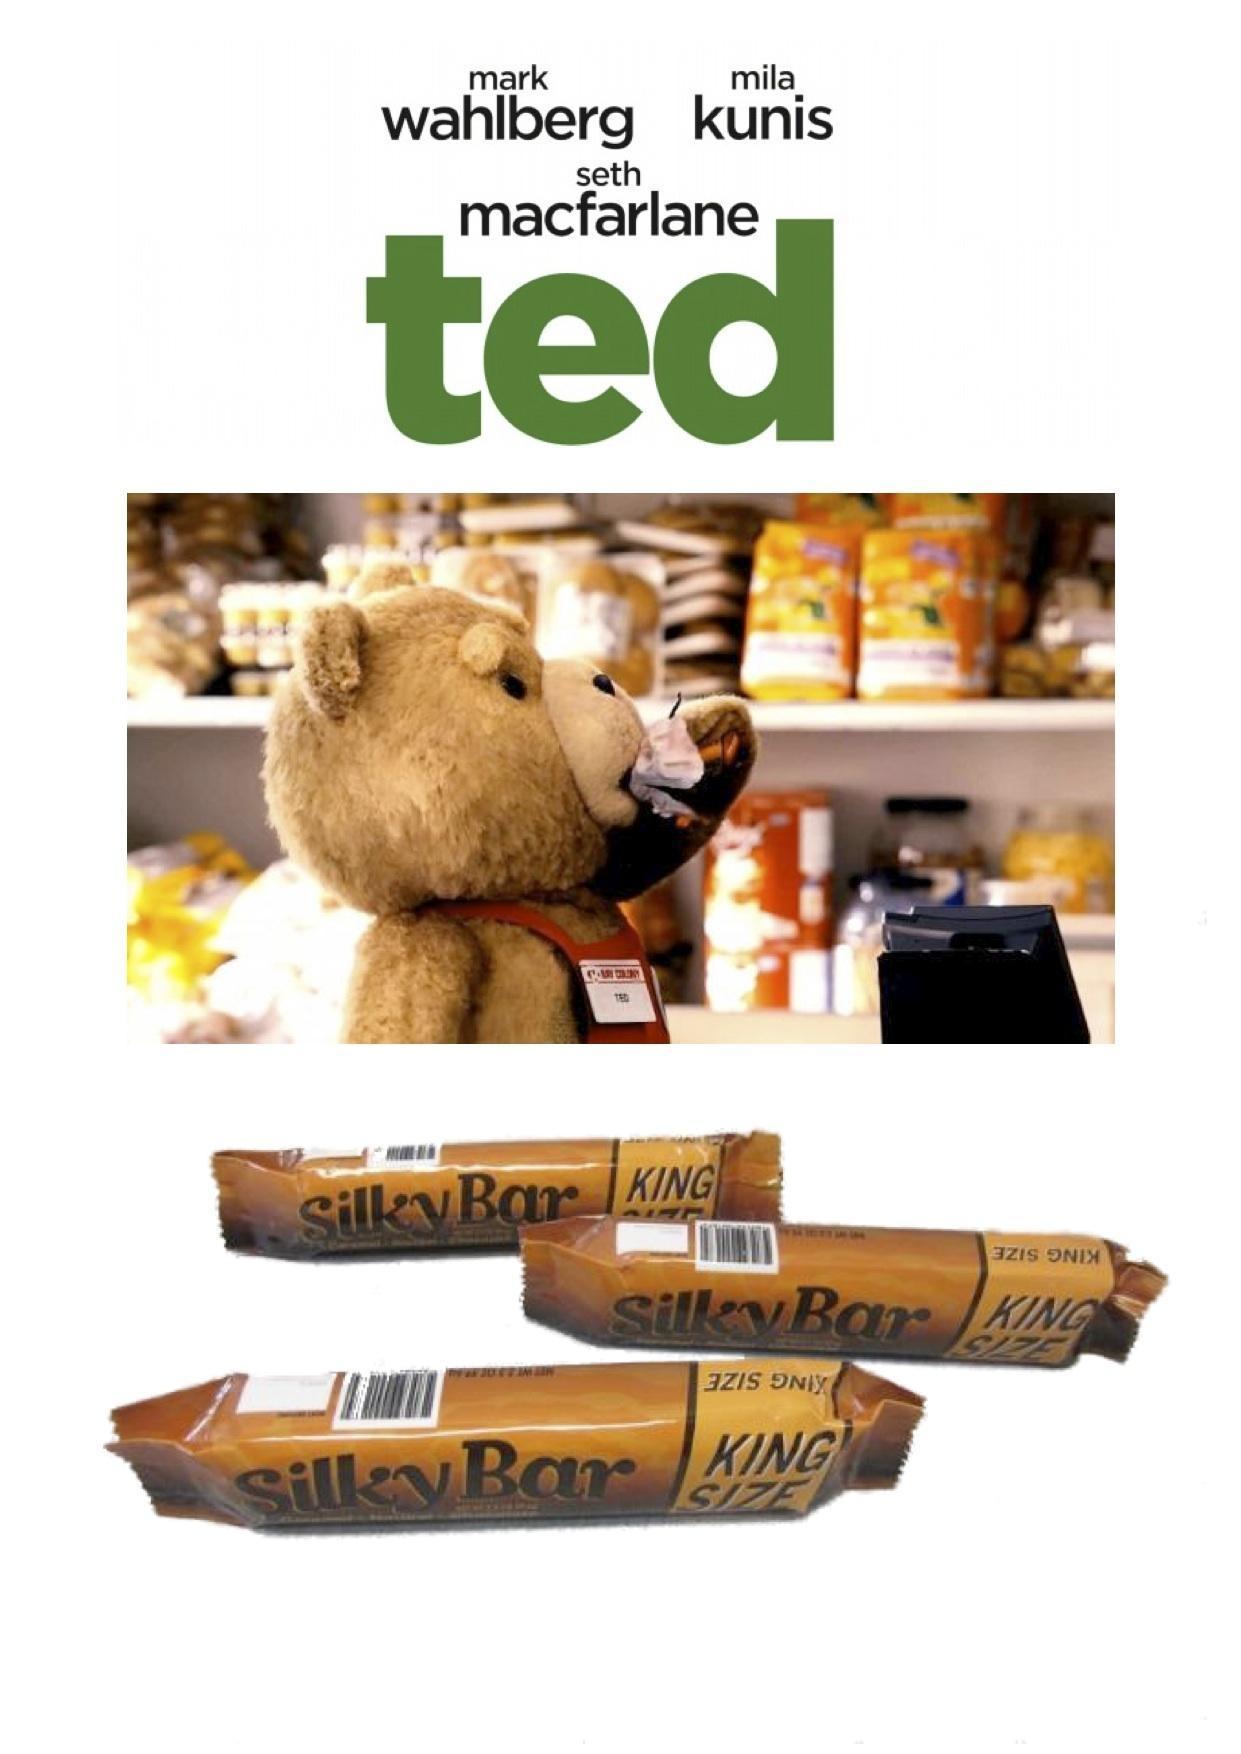 Постер фильма Третий лишний | Ted